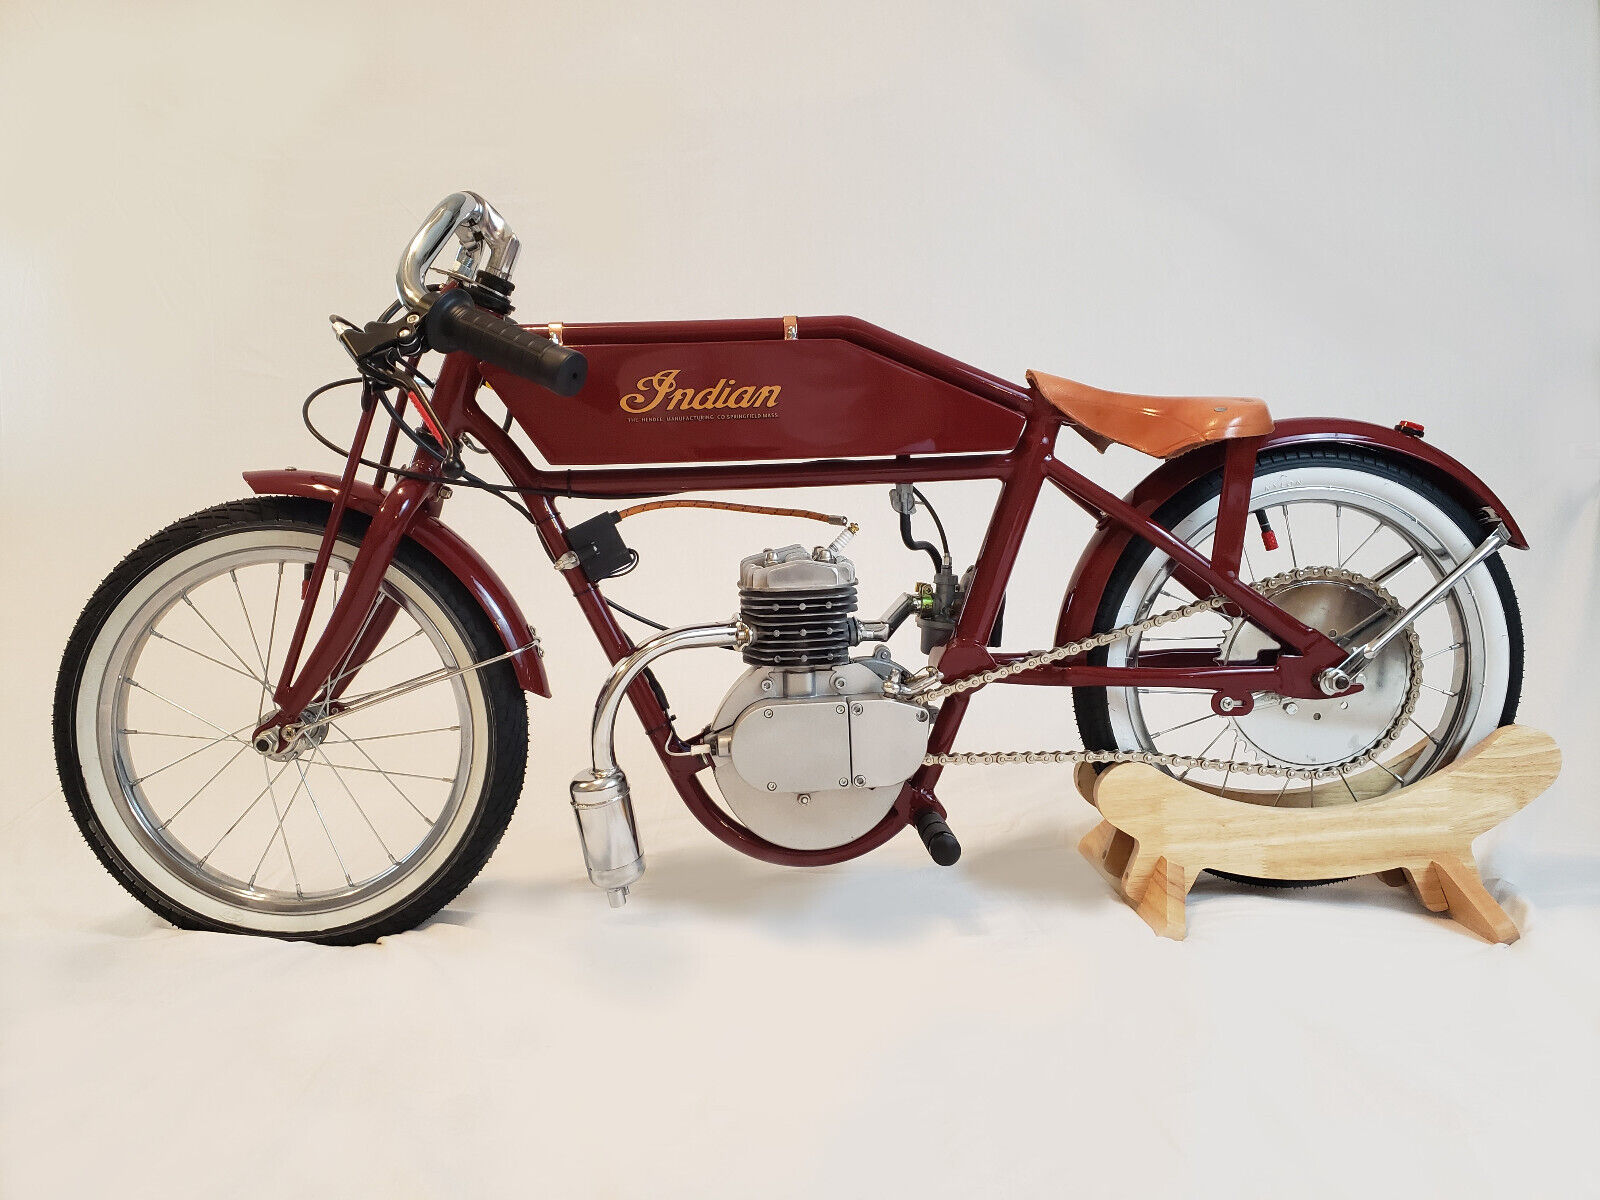 1913 INDIAN board track racer 1/2 scale model motorcycle z50 mini bike replica